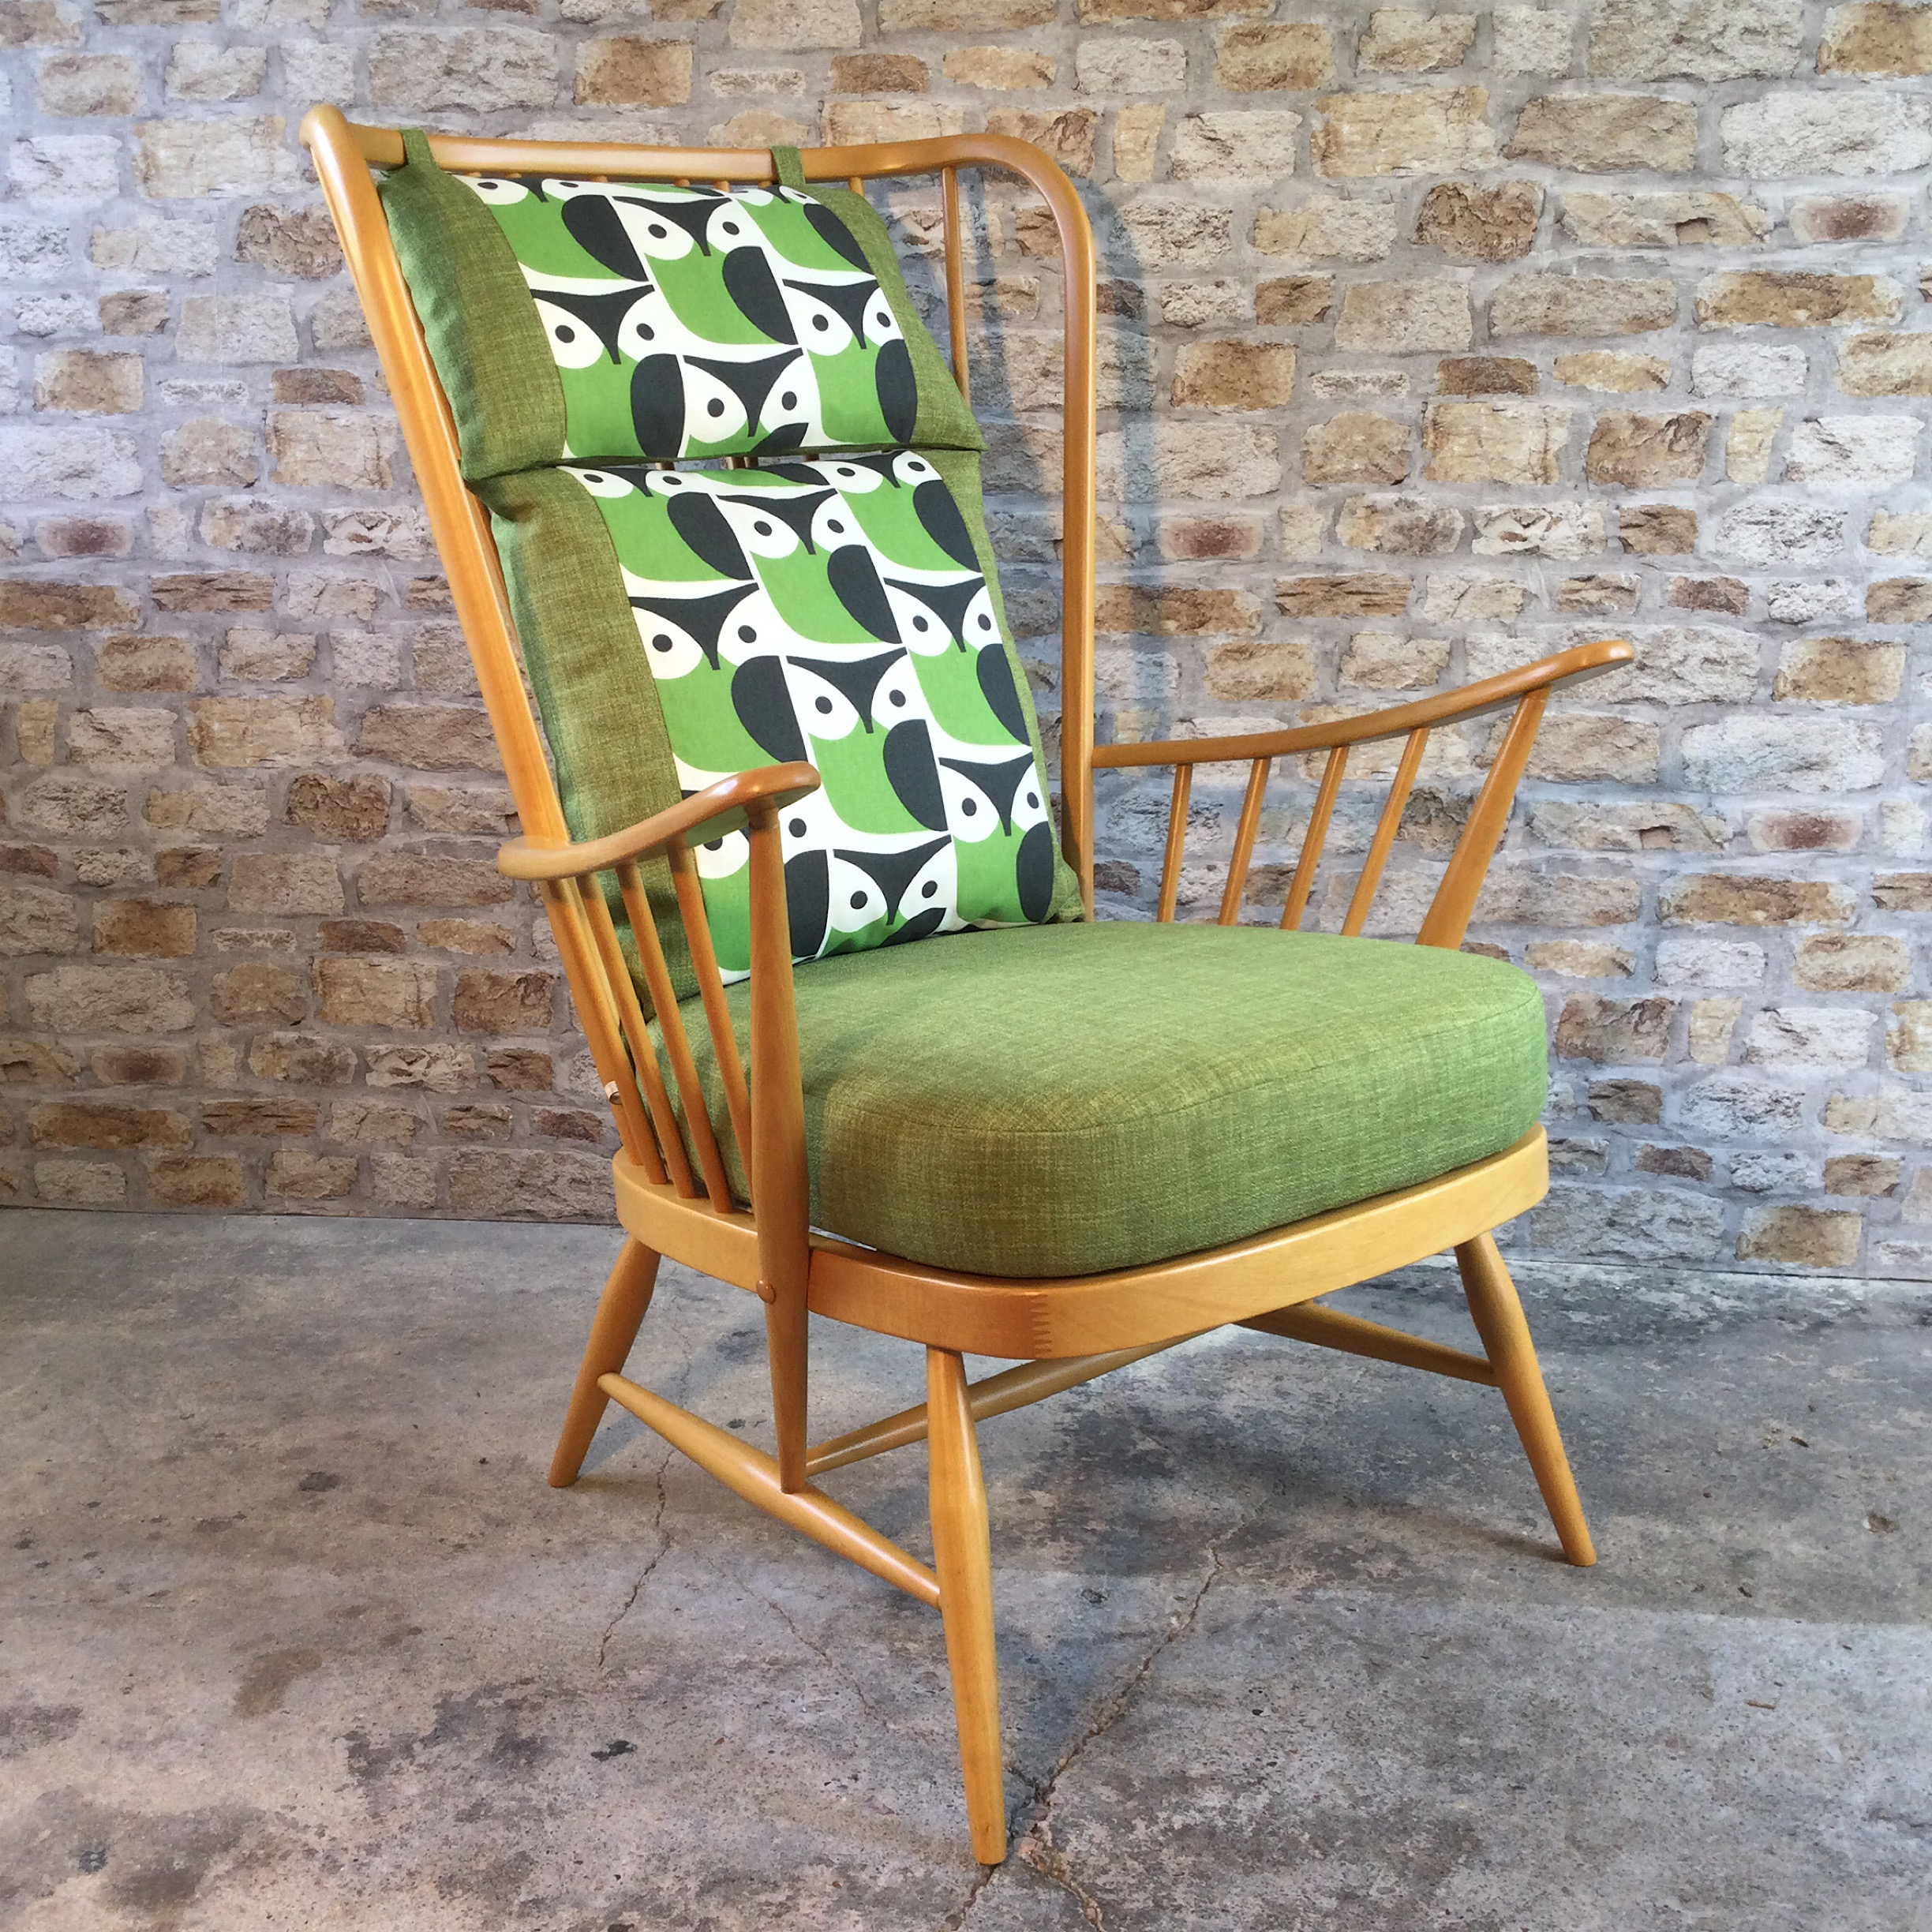 Ercol Evergreen Chair with Orla Kiely ‘Owl’ Cushions